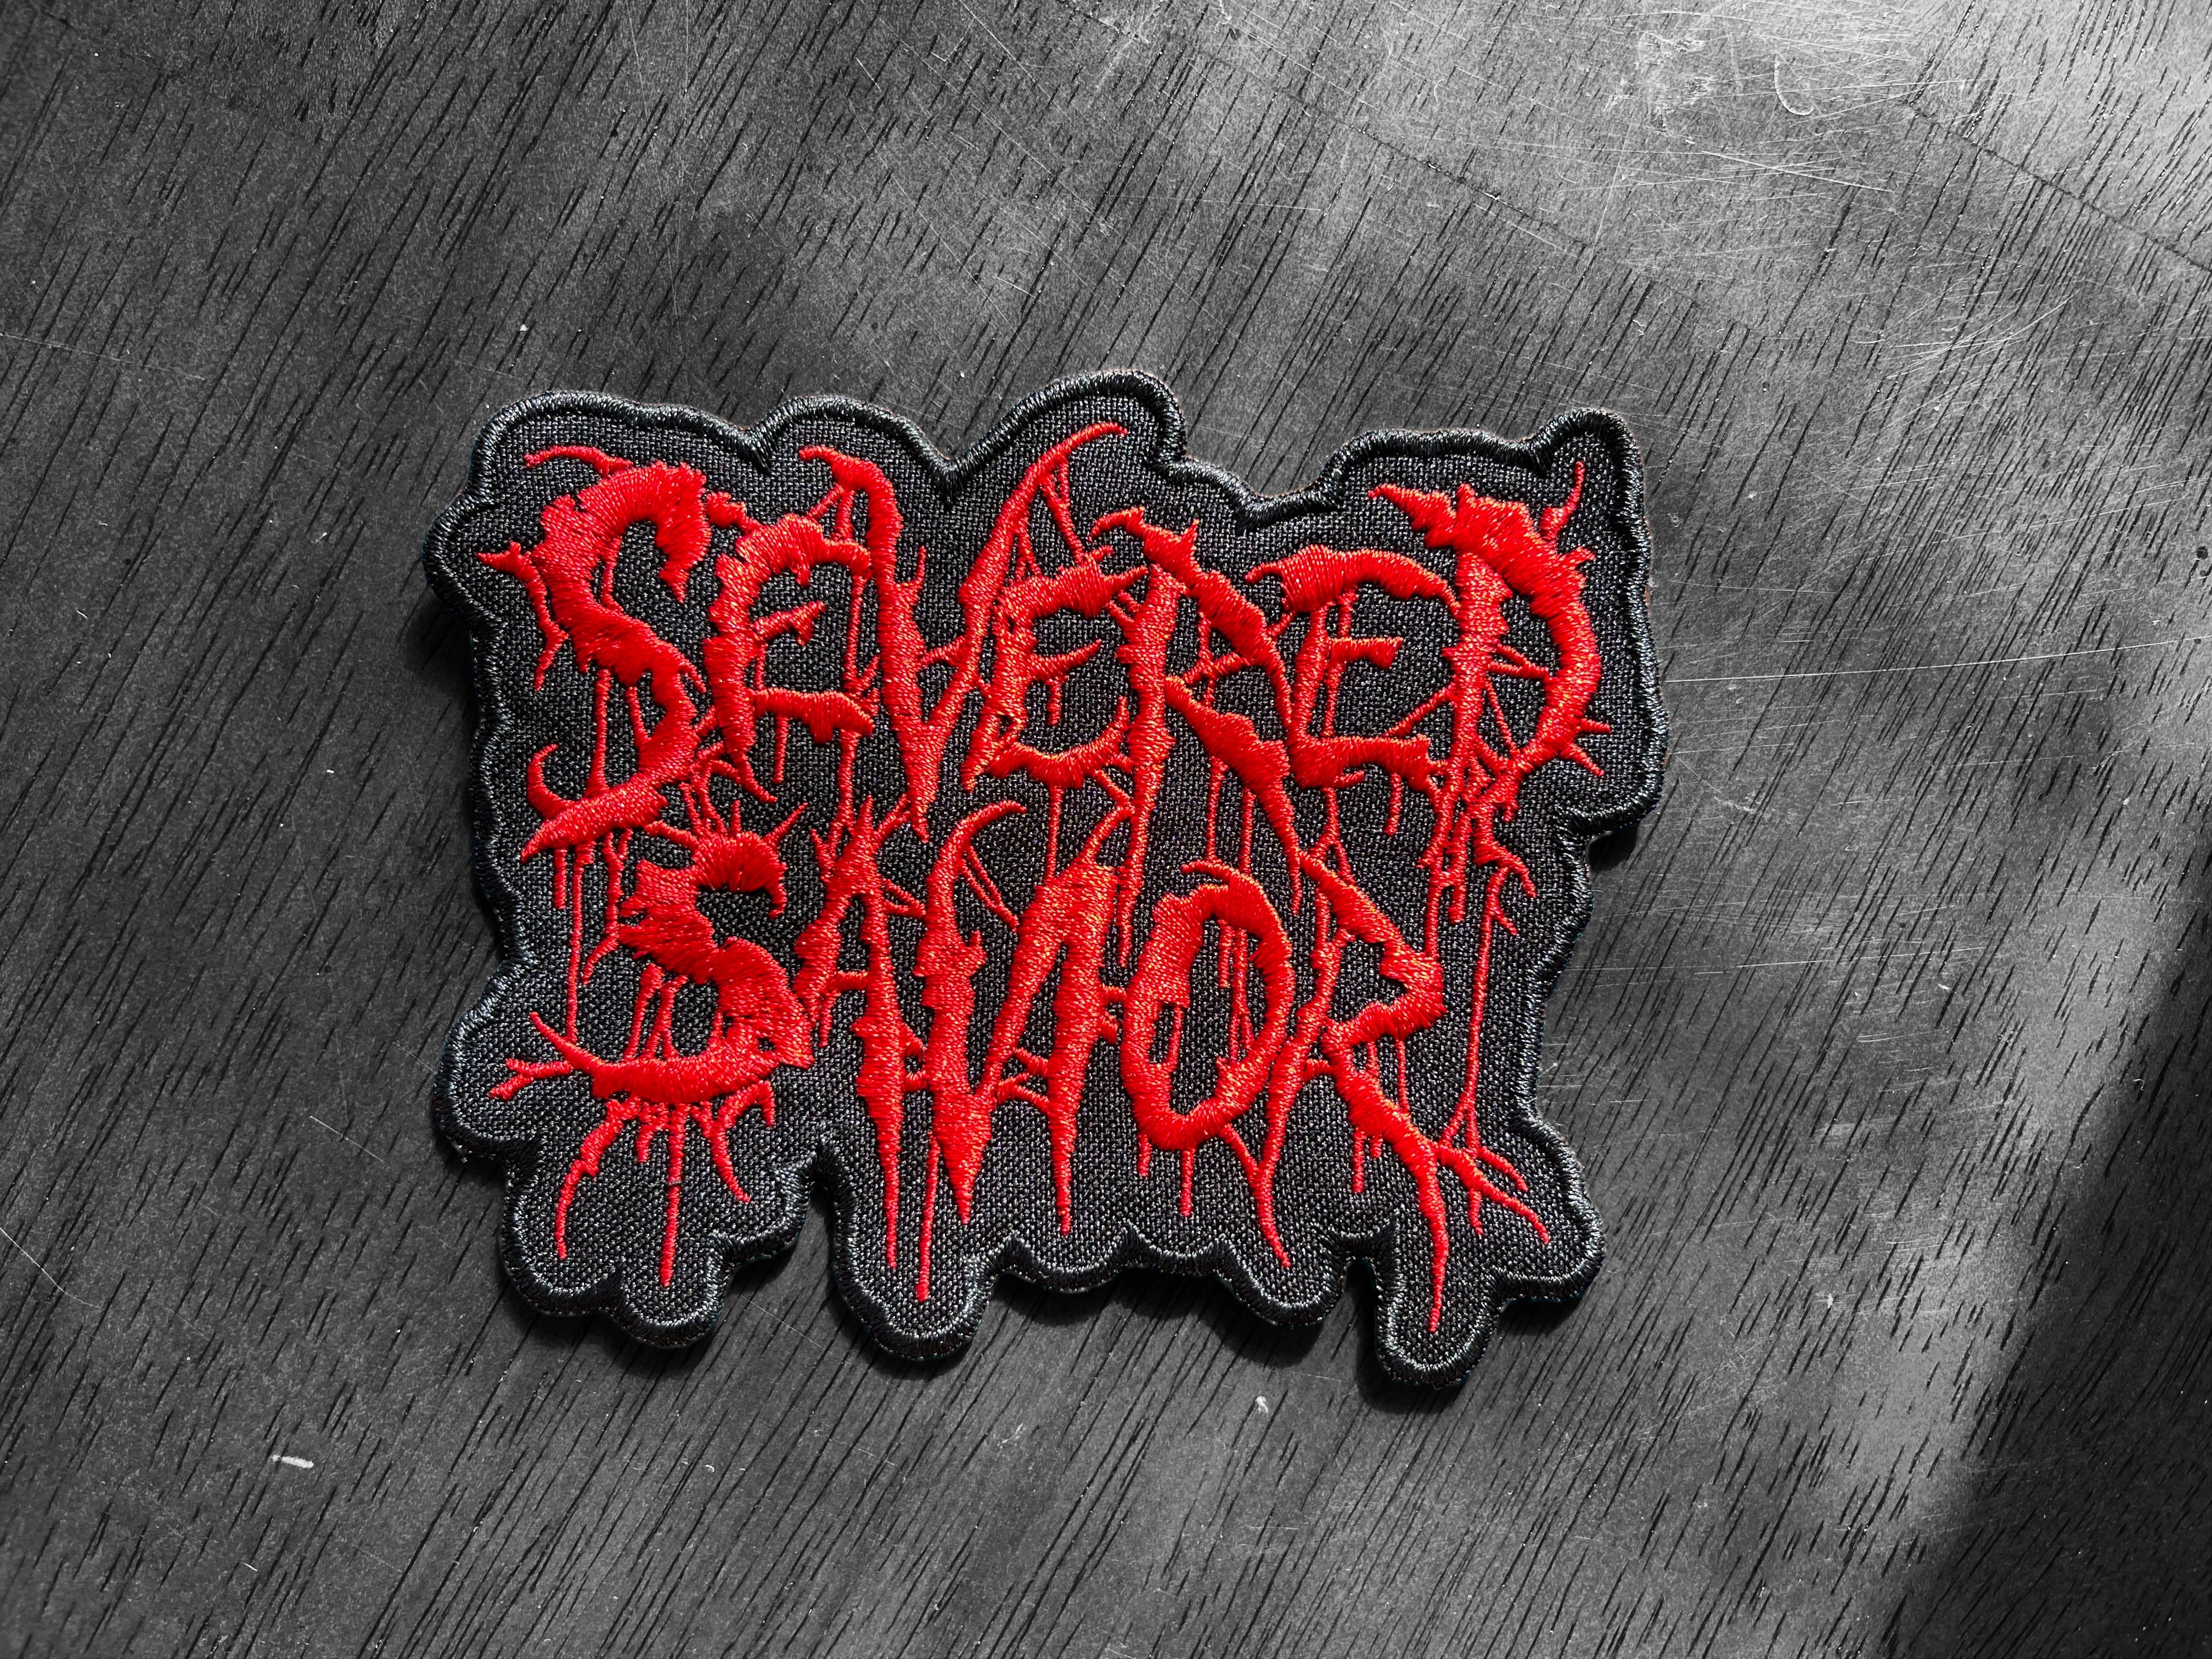 Severed Savior Logo Patch - Red